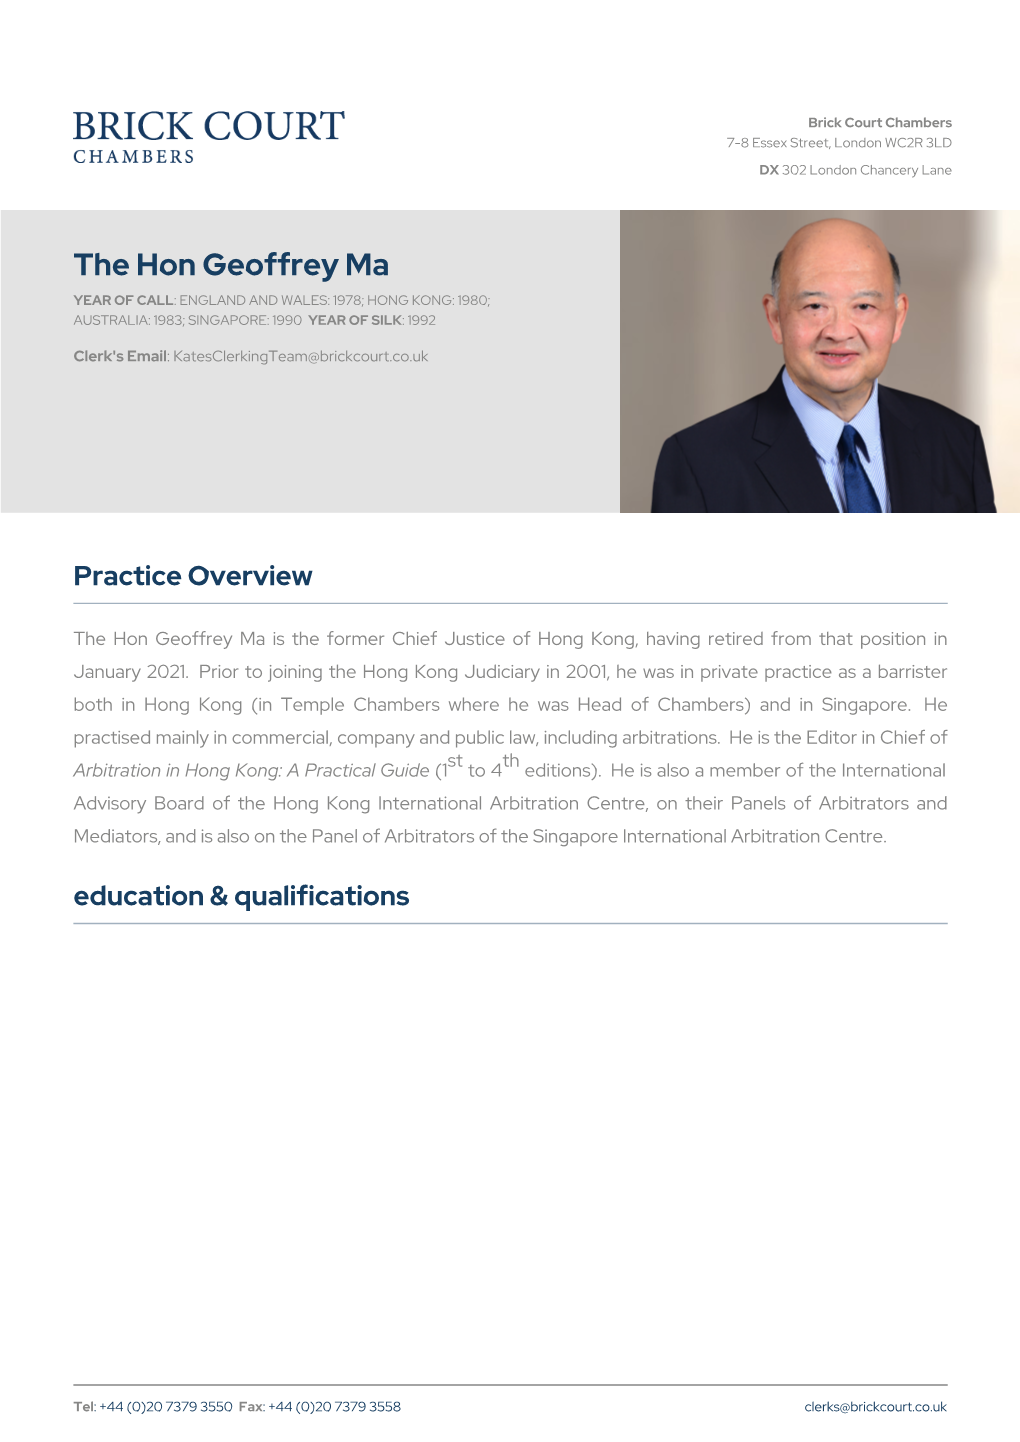 The Hon Geoffrey Ma | Brick Court Chambers